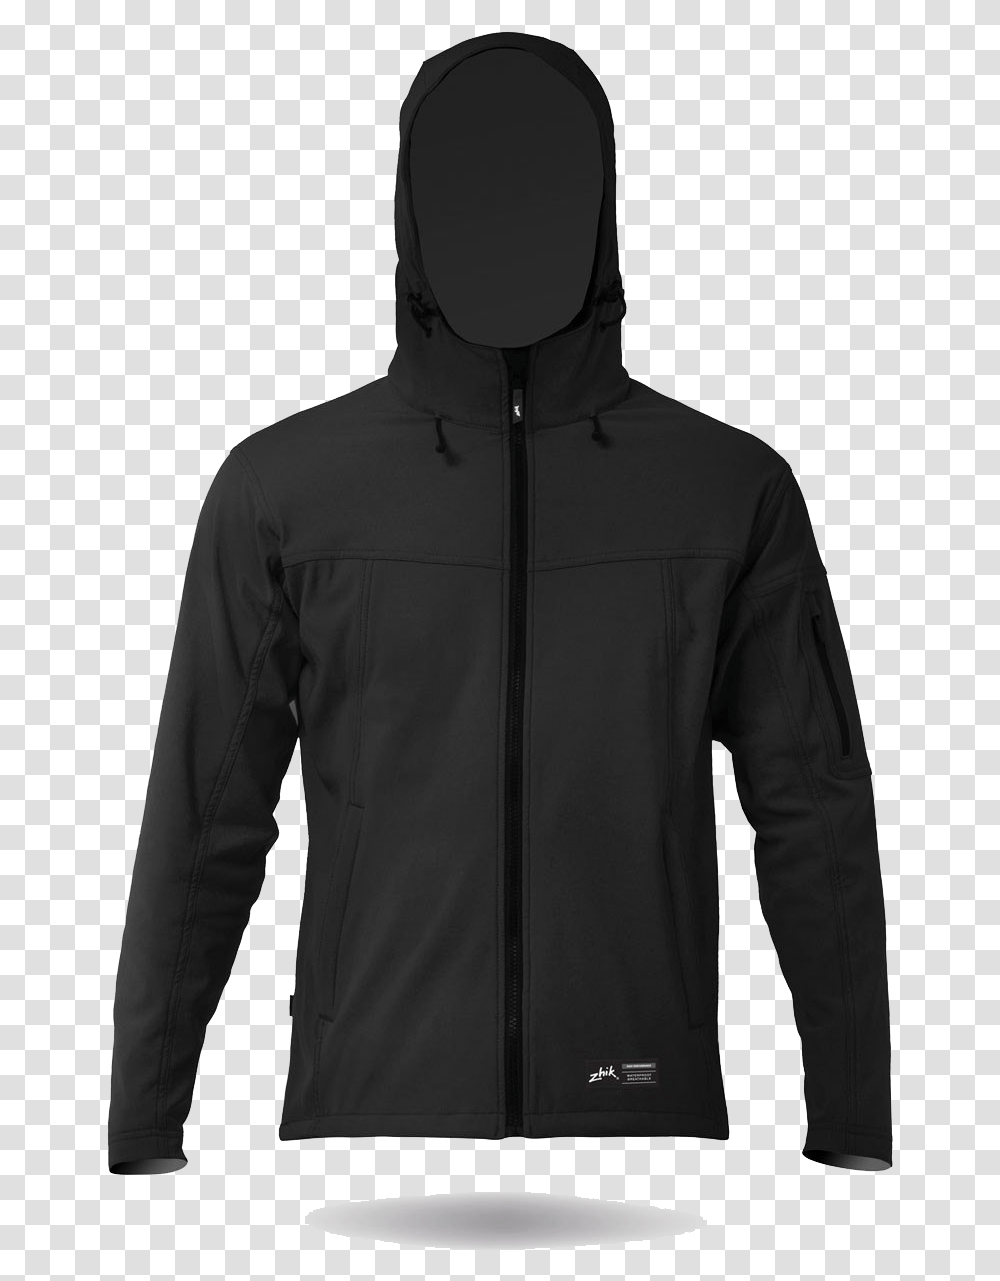 Black Jacket Download Image Zhik Aroshell Fleece Jacket, Apparel, Coat, Sweatshirt Transparent Png